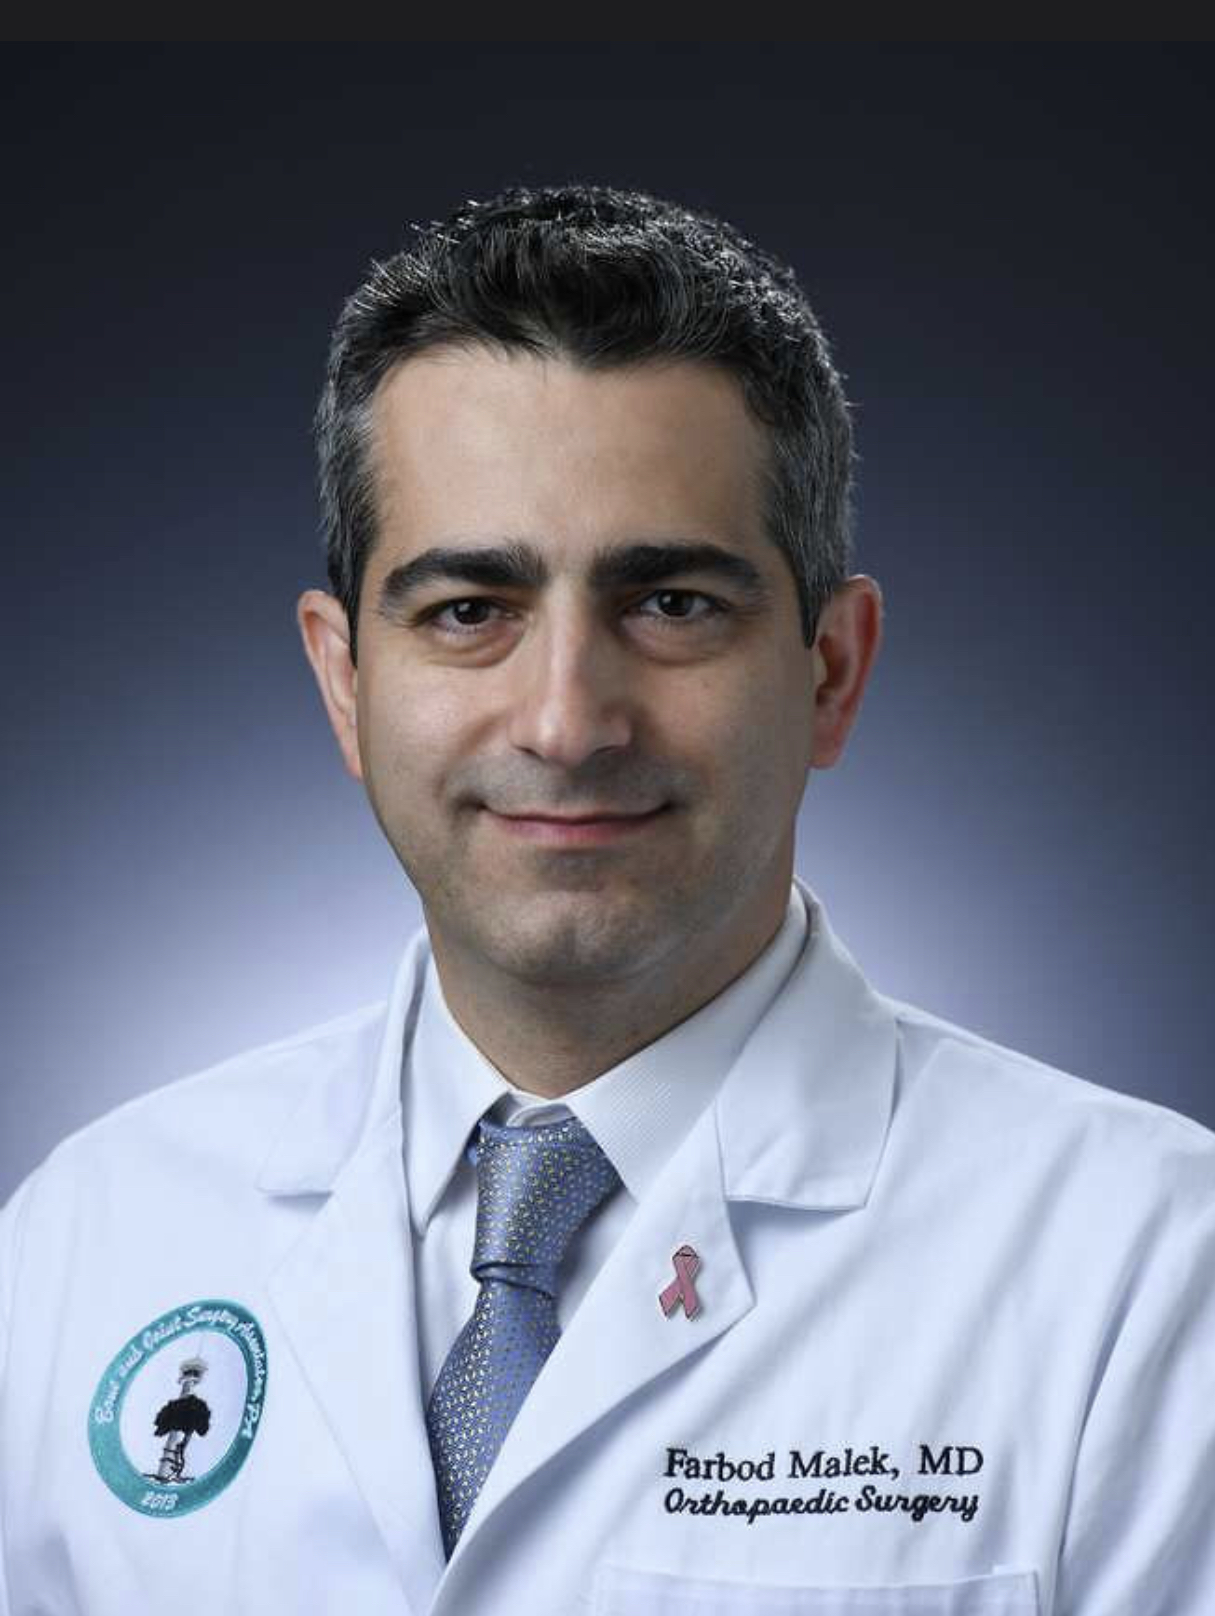 Dr. Farbod Malek